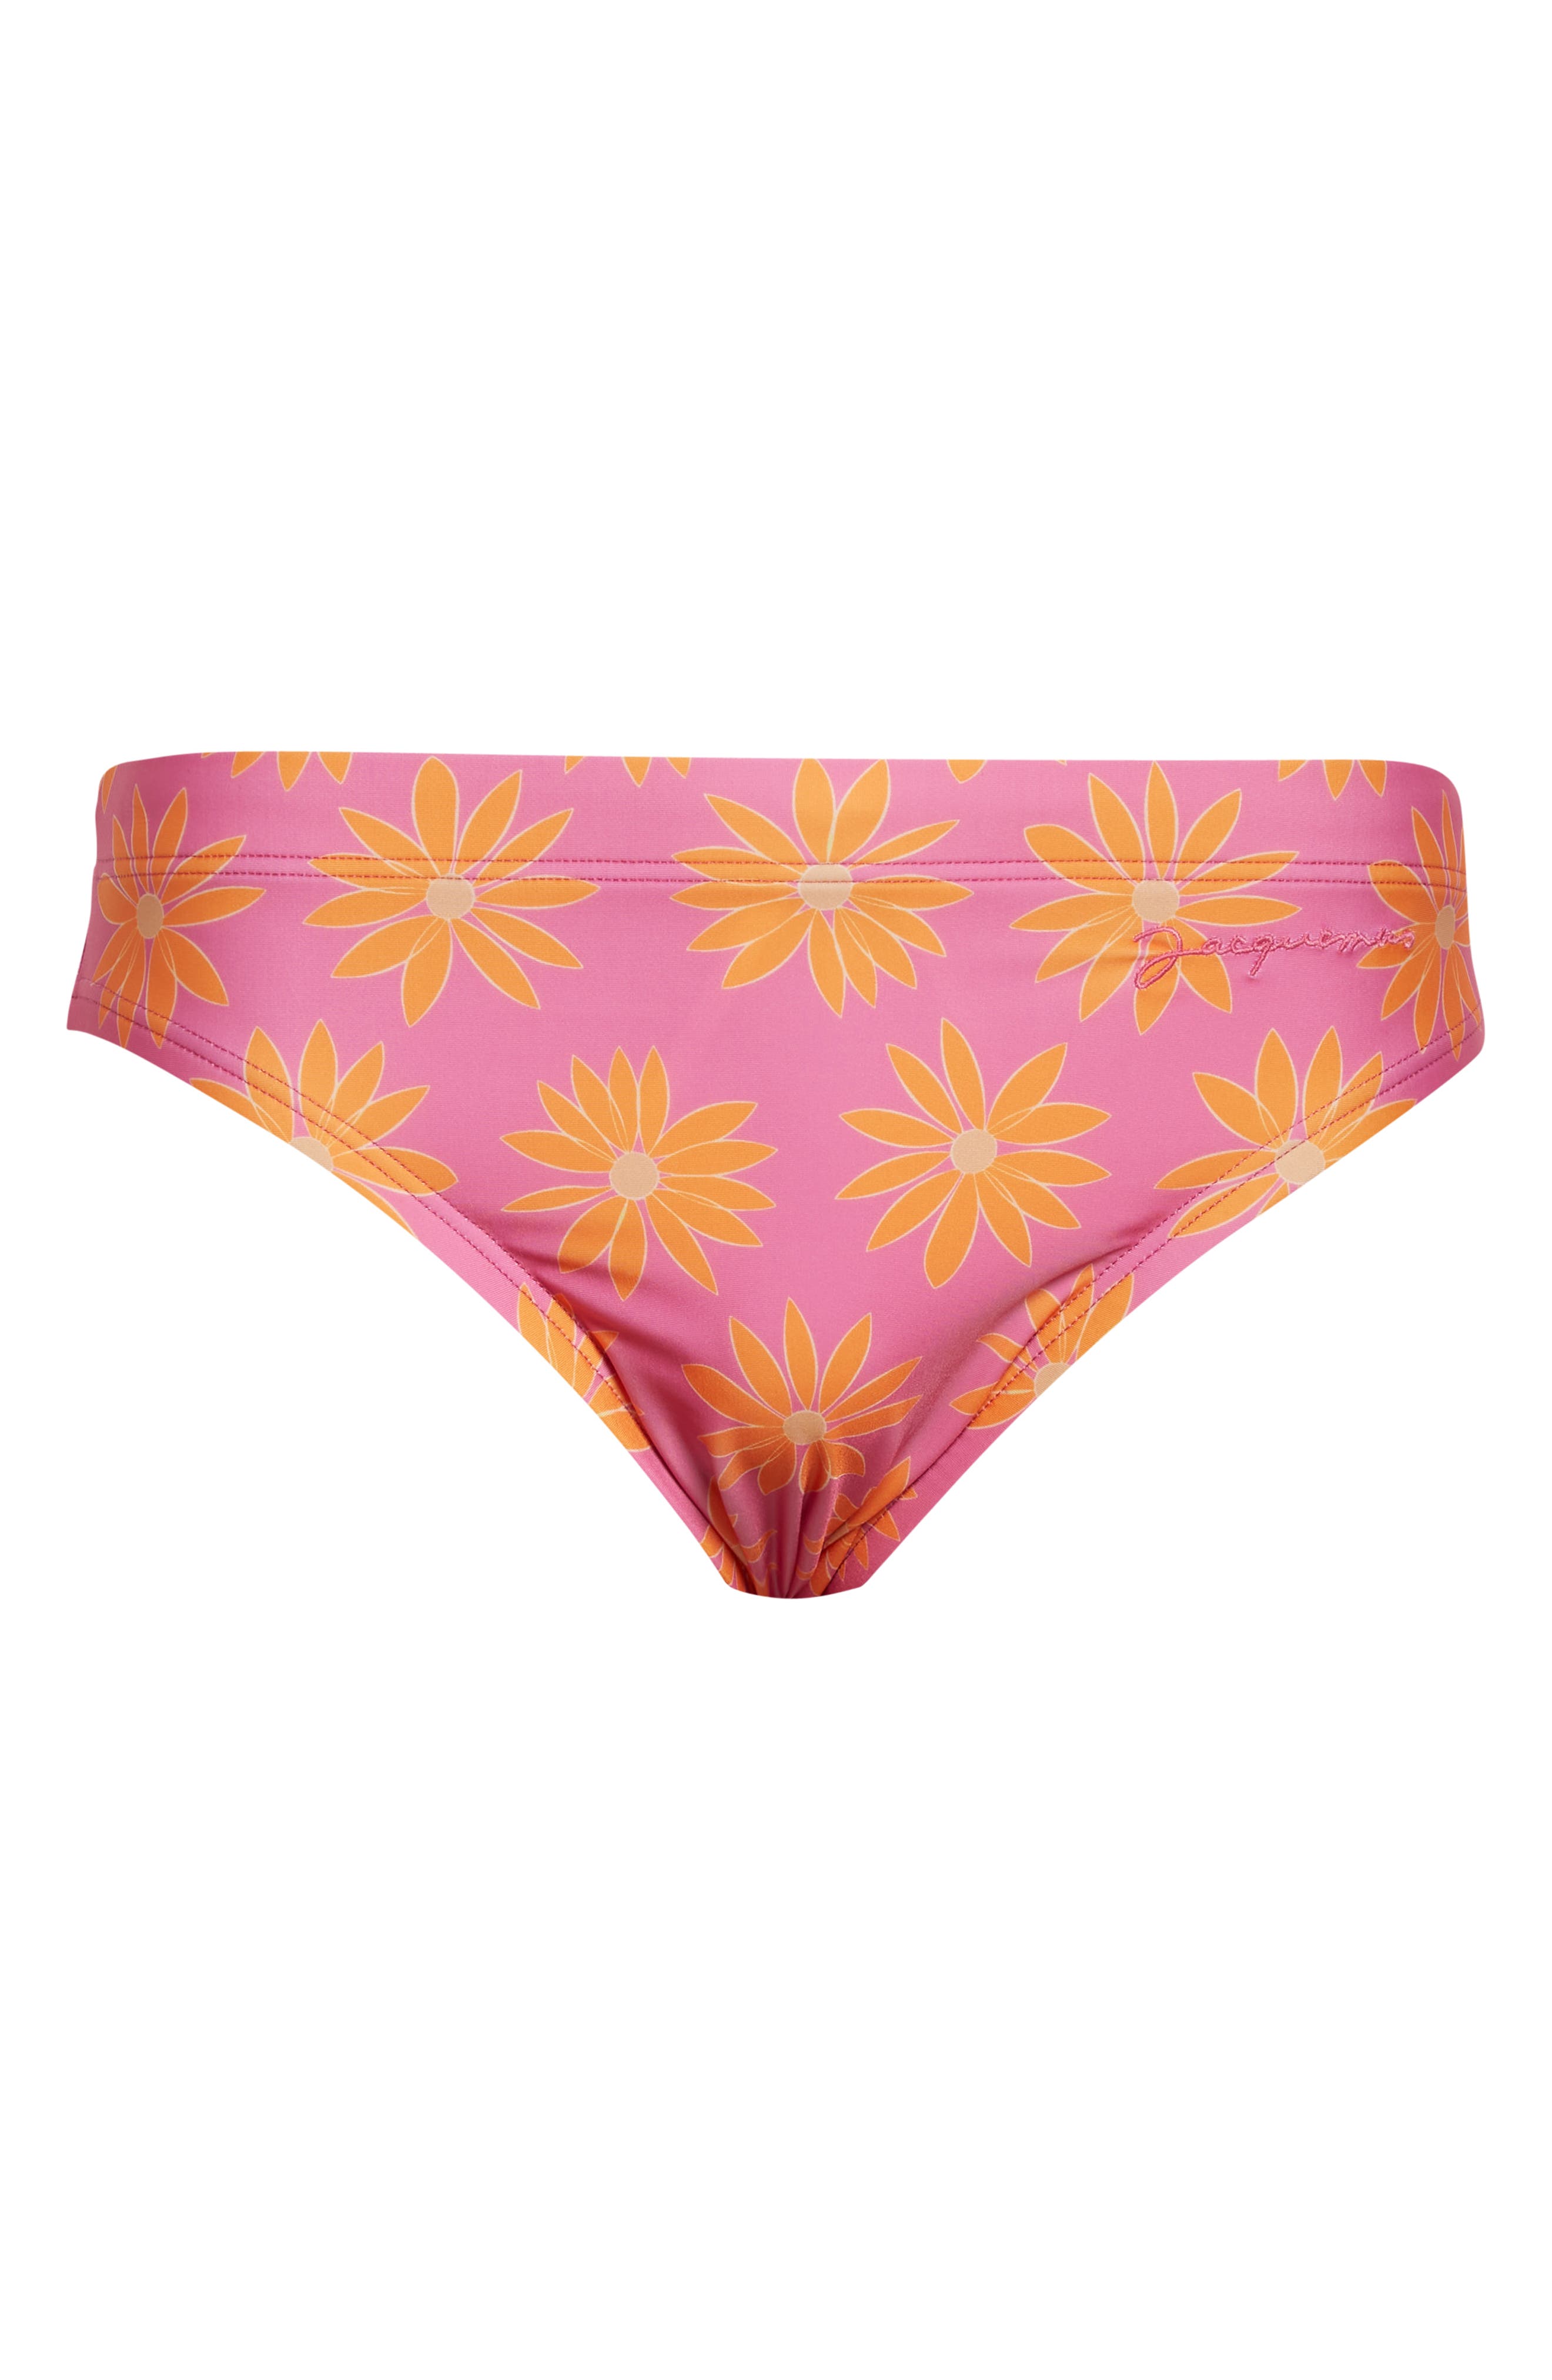 Jacquemus Le Slip de Bain Swim Briefs in Print Orange/Pink Flowers at Nordstrom, Size 42 Us